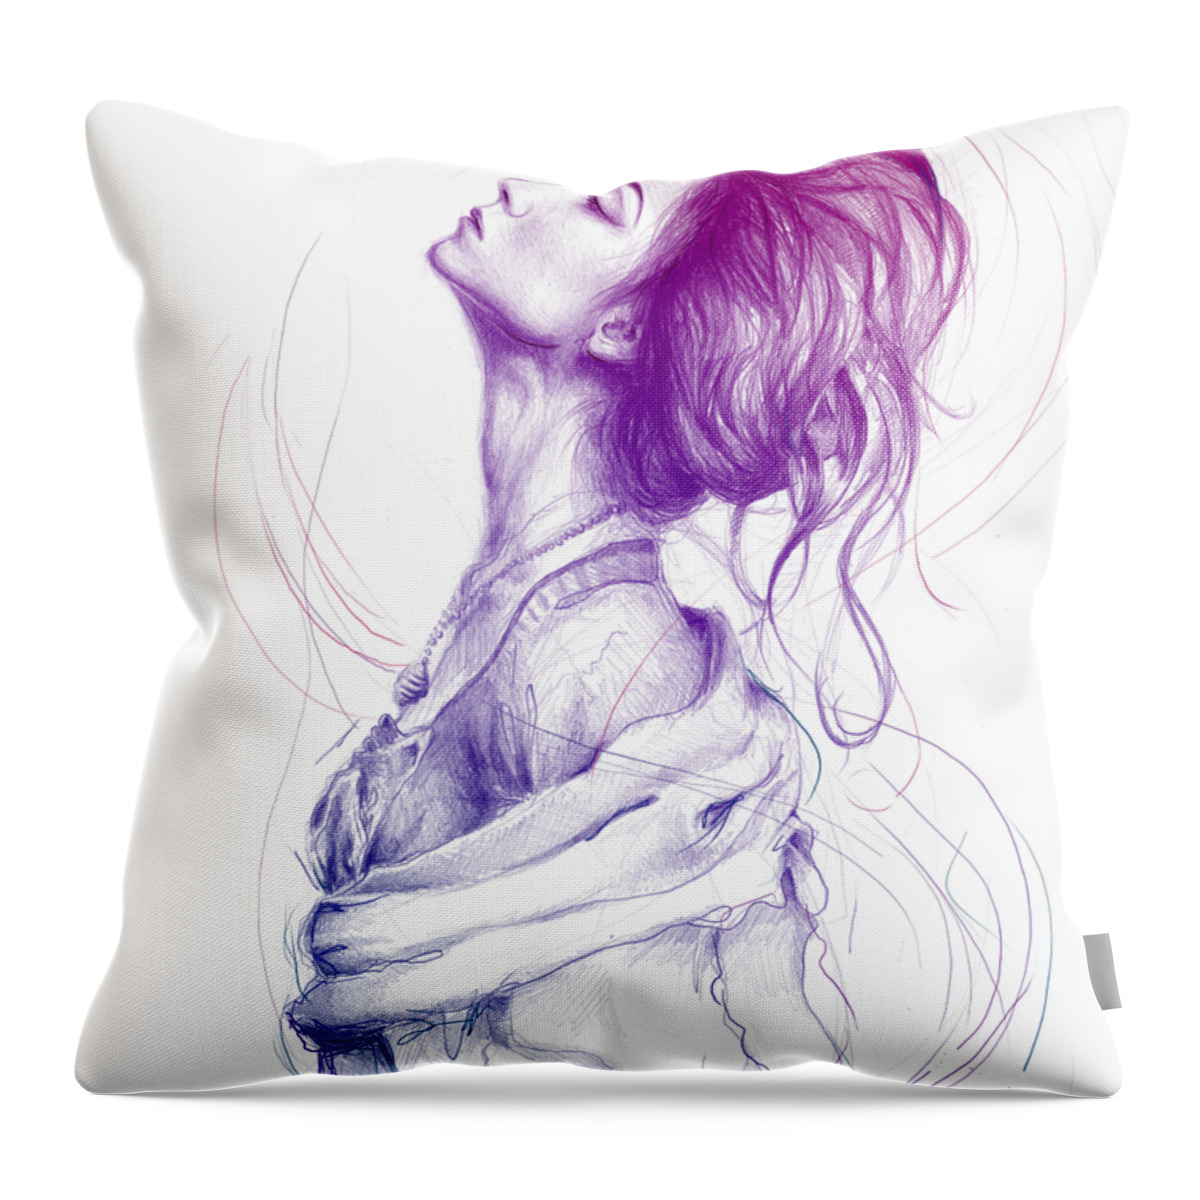 Pencil Portrait Throw Pillow featuring the drawing Purple Fashion Illustration by Olga Shvartsur